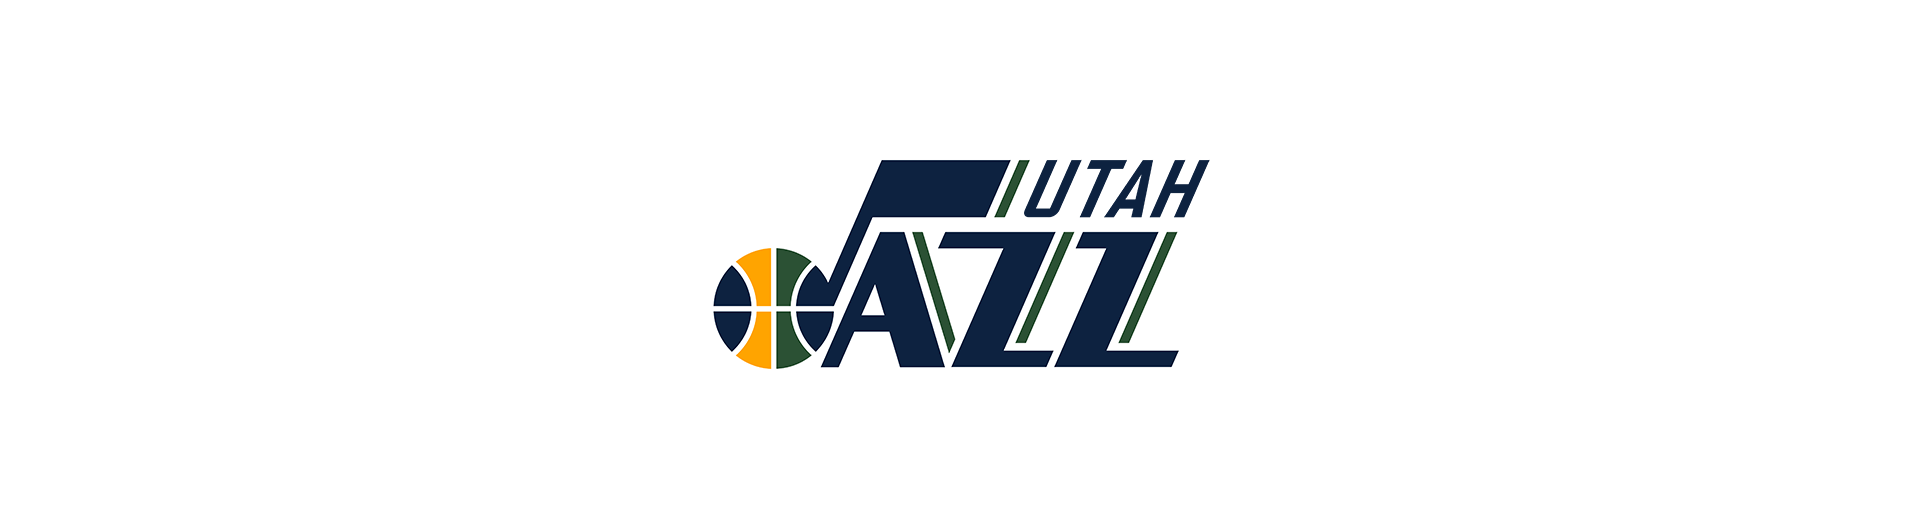 Utah Jazz (UTA)